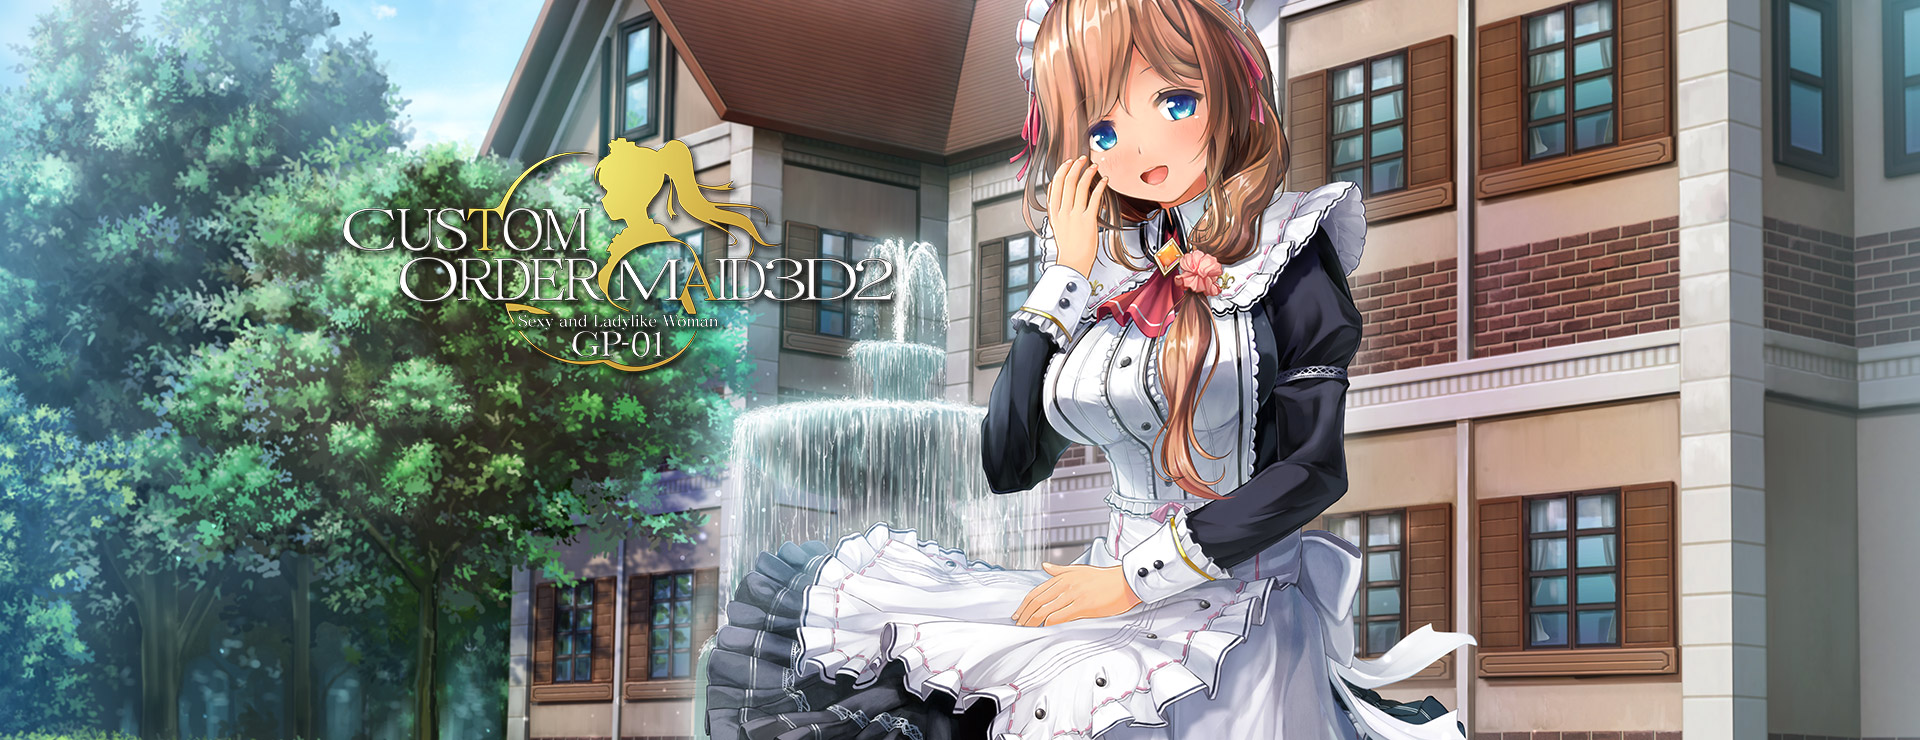 Custom Order Maid 3D 2: Sexy and Ladylike Woman GP01 - アクションアドベンチャー ゲーム